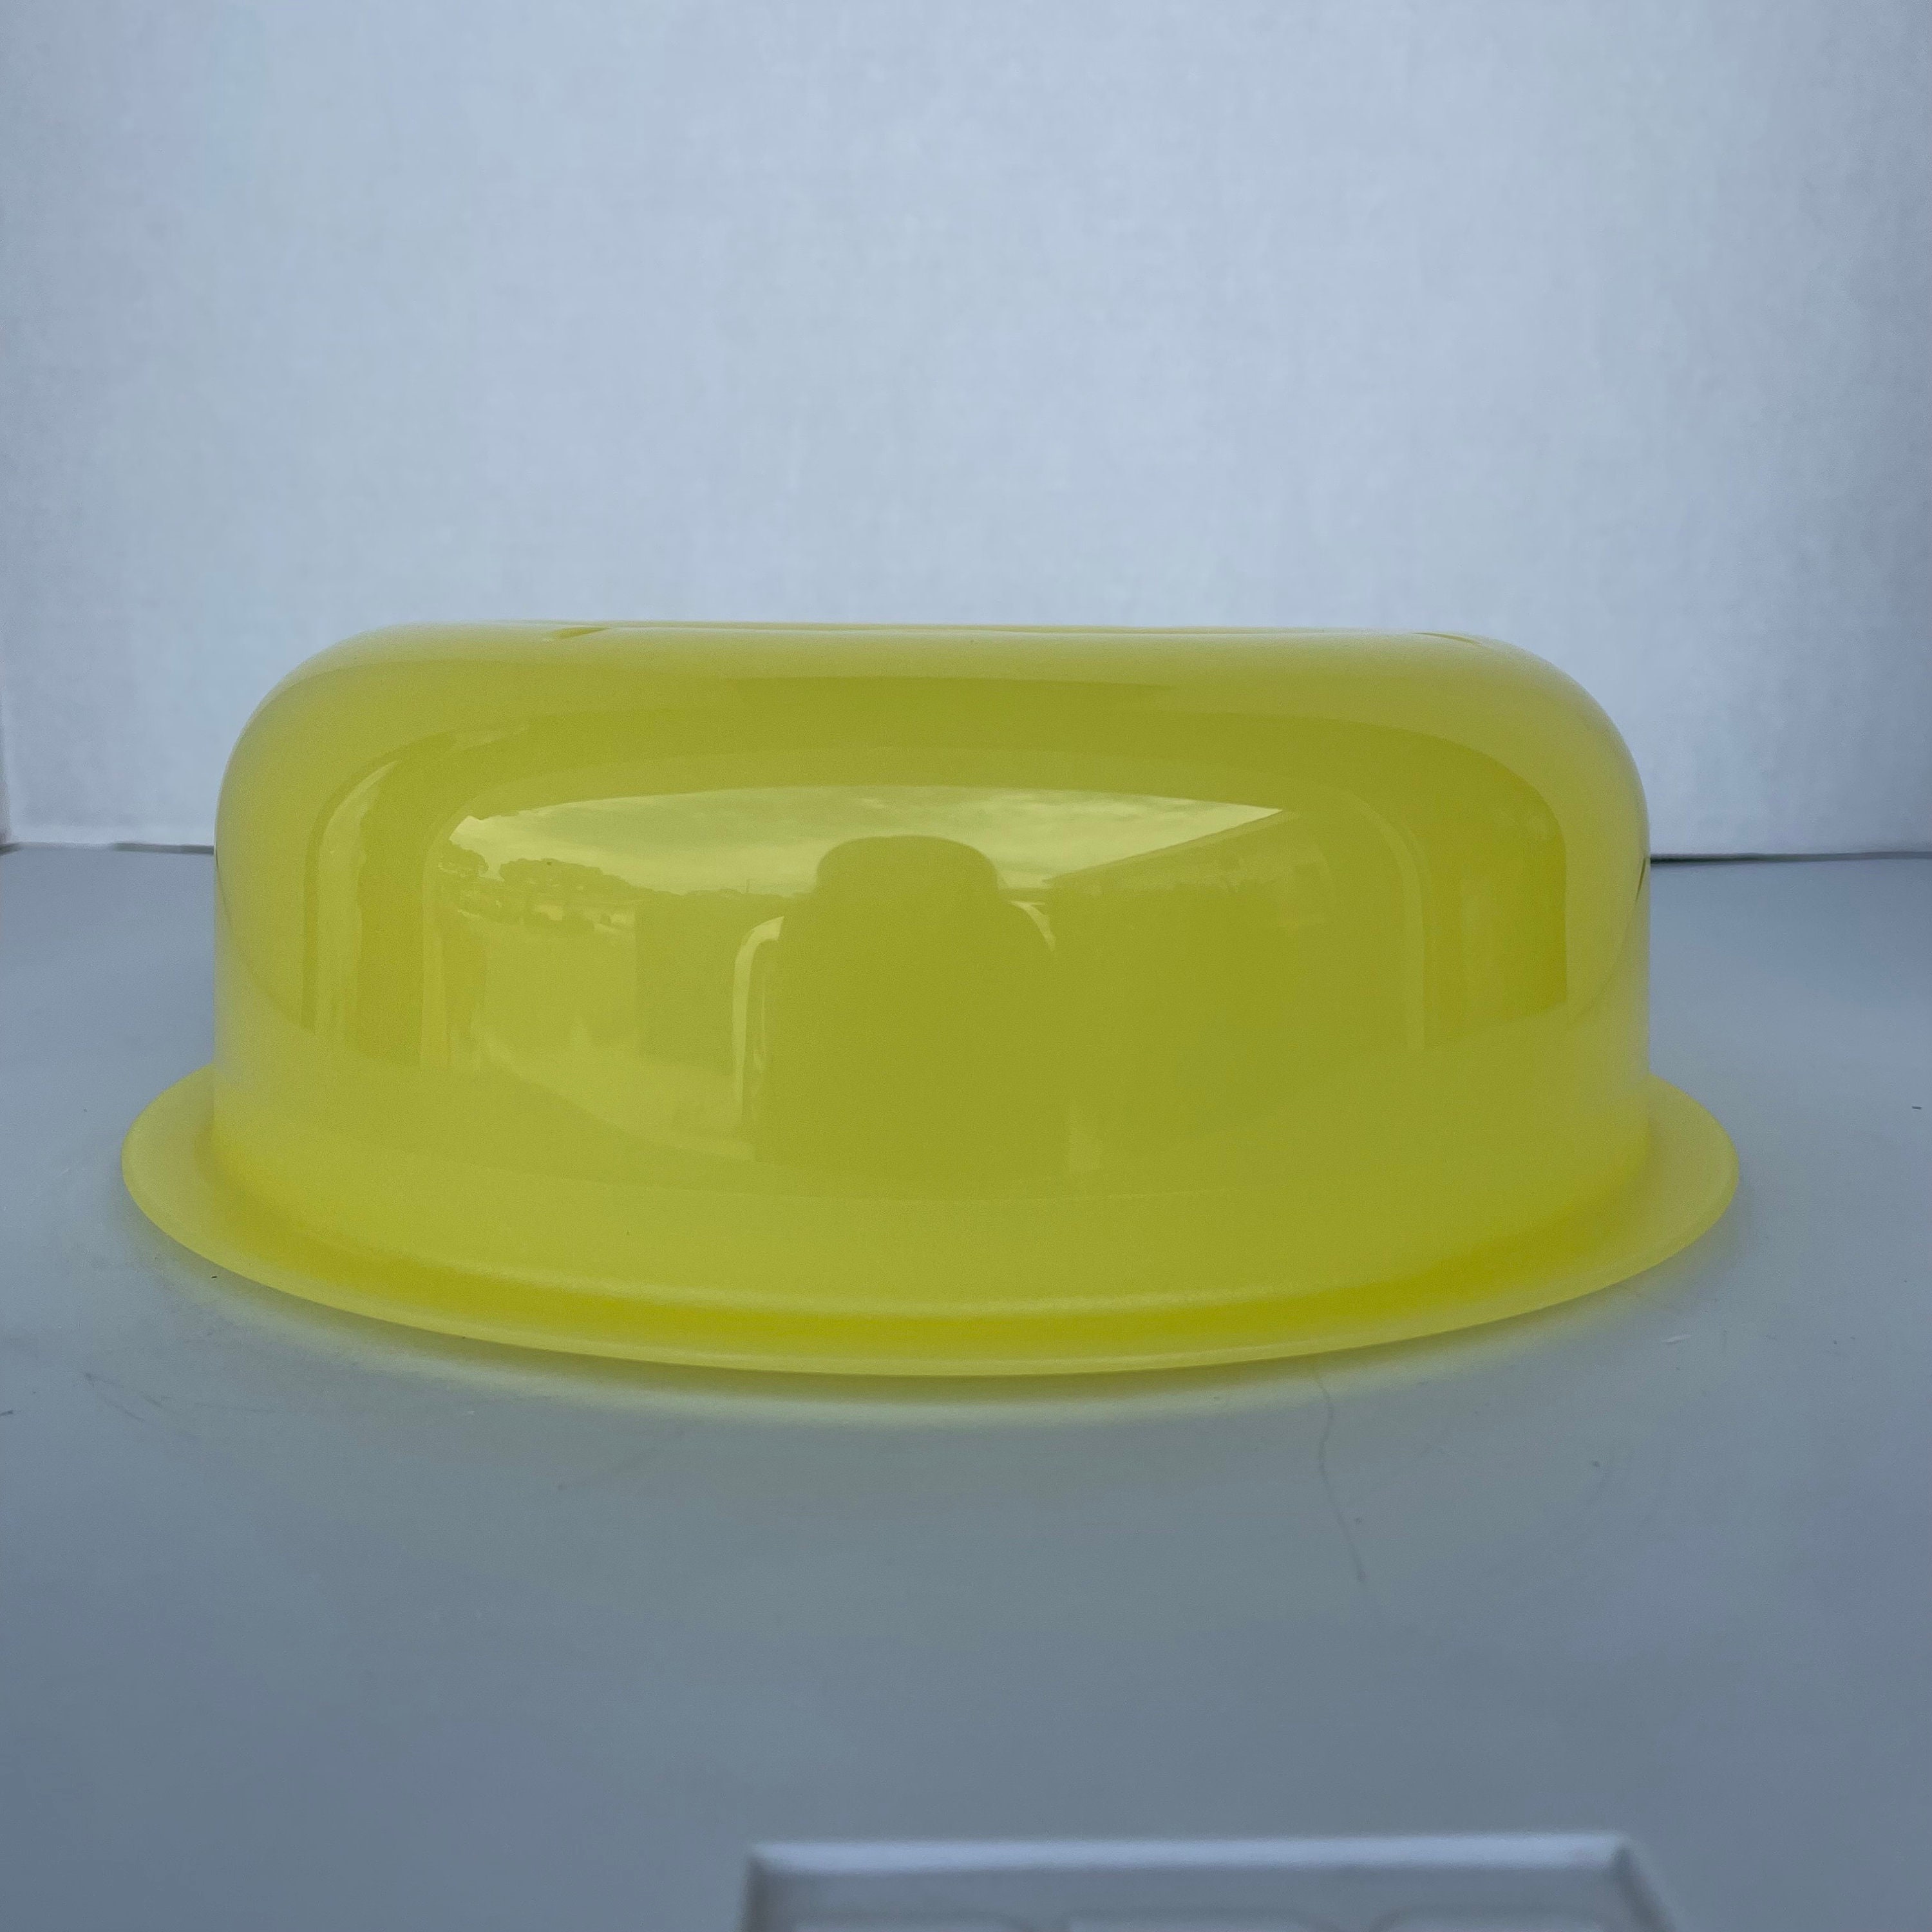 New UNIQUE Tupperware Microwave Dome in Bright Yellow Color